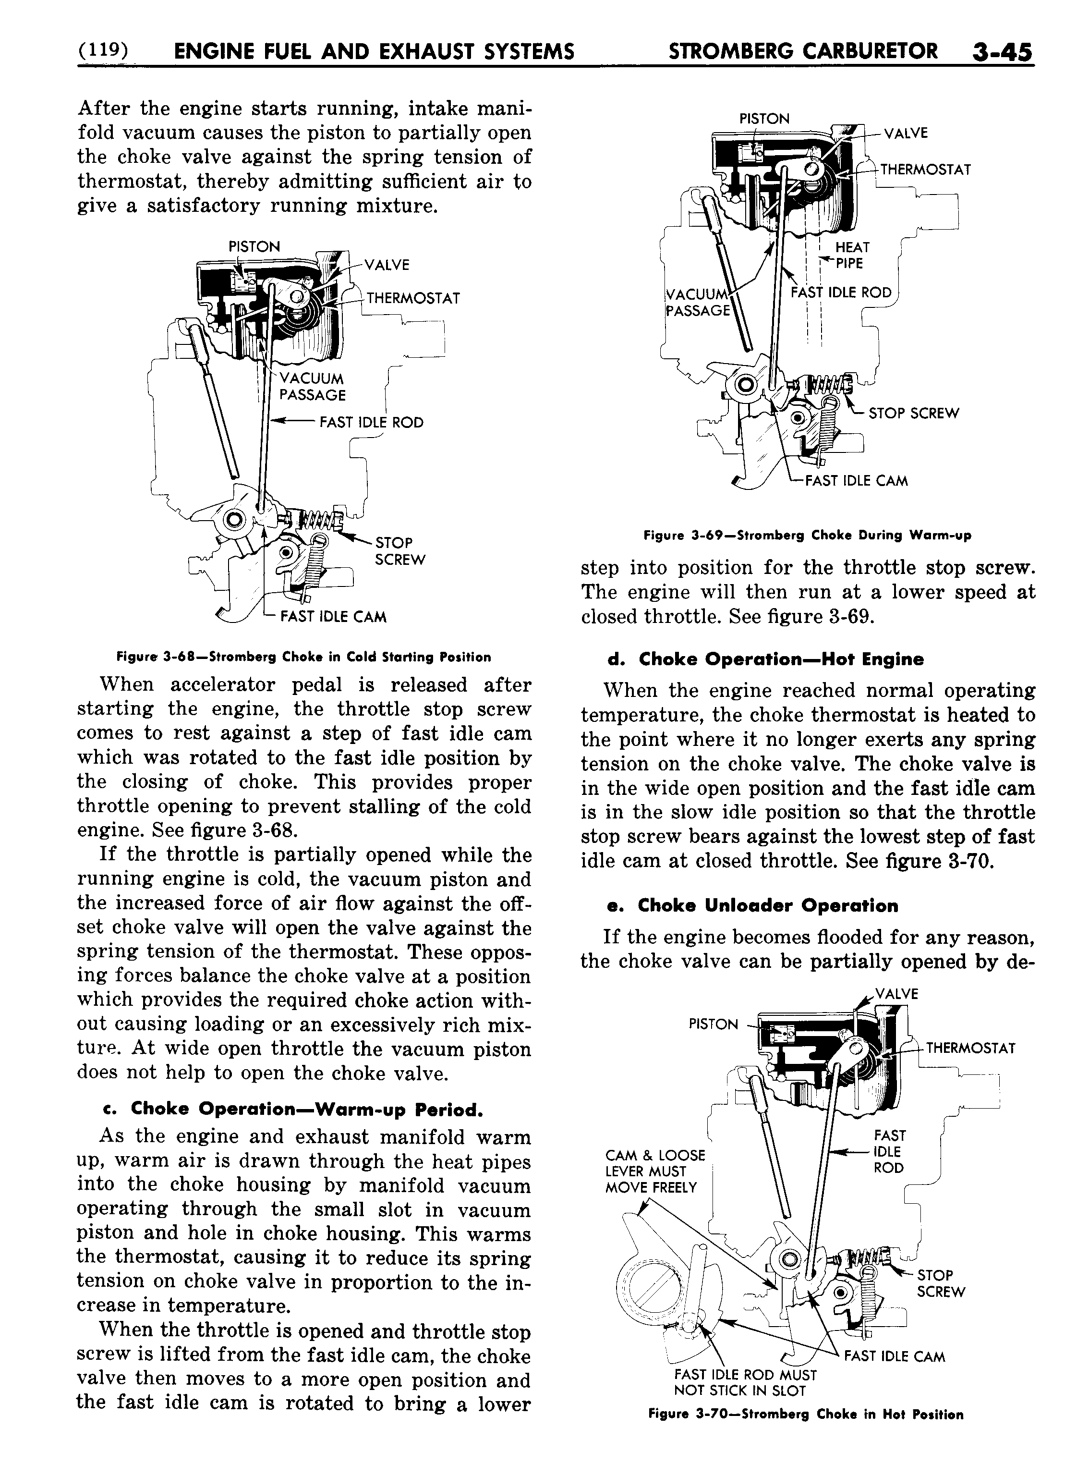 n_04 1948 Buick Shop Manual - Engine Fuel & Exhaust-045-045.jpg